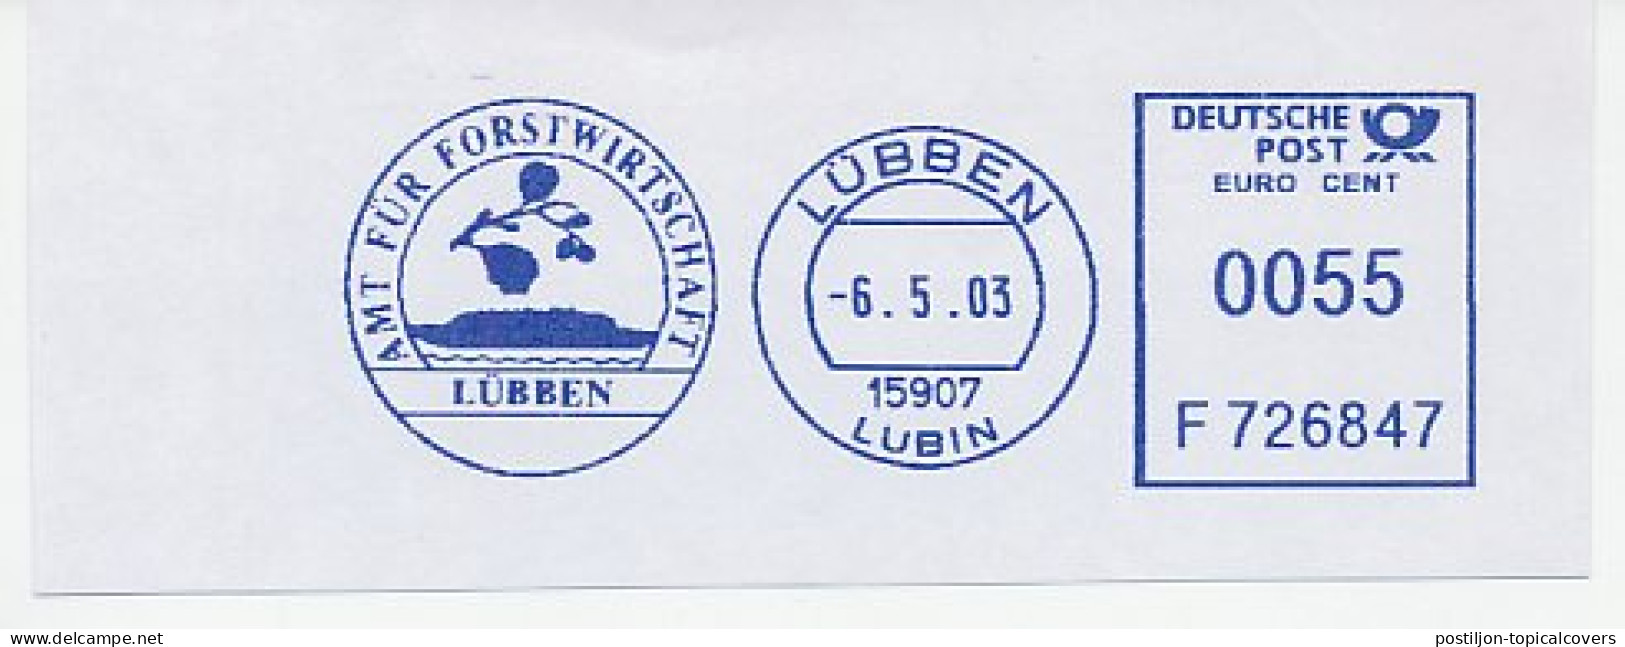 Meter Cut Germany 2003 Forestry - Lubben - Alberi